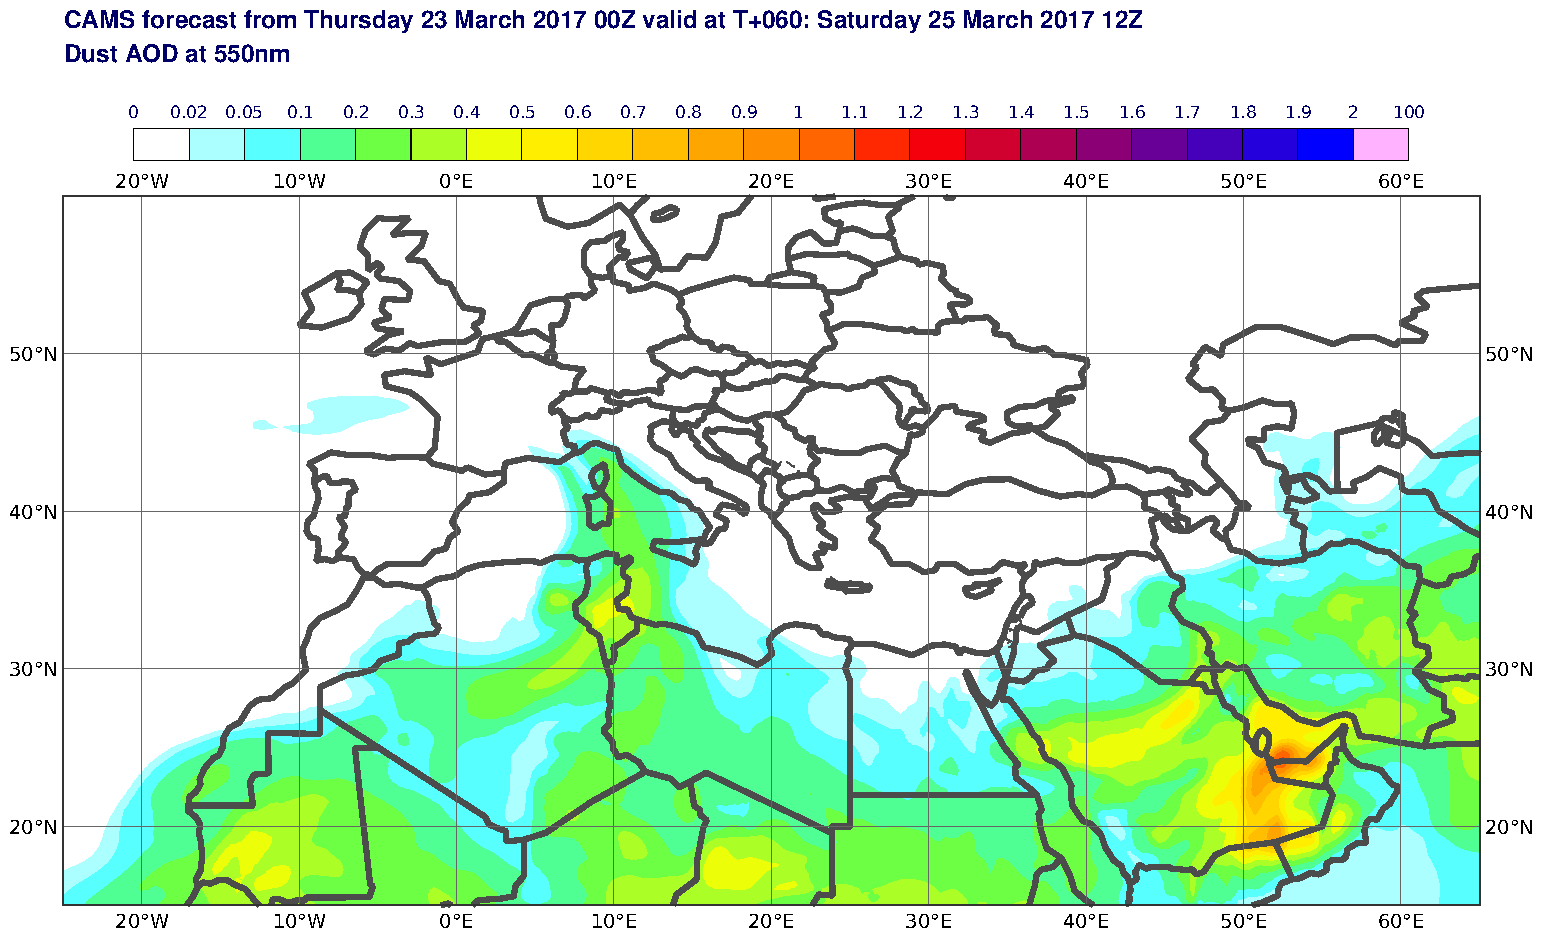 Dust AOD at 550nm valid at T60 - 2017-03-25 12:00